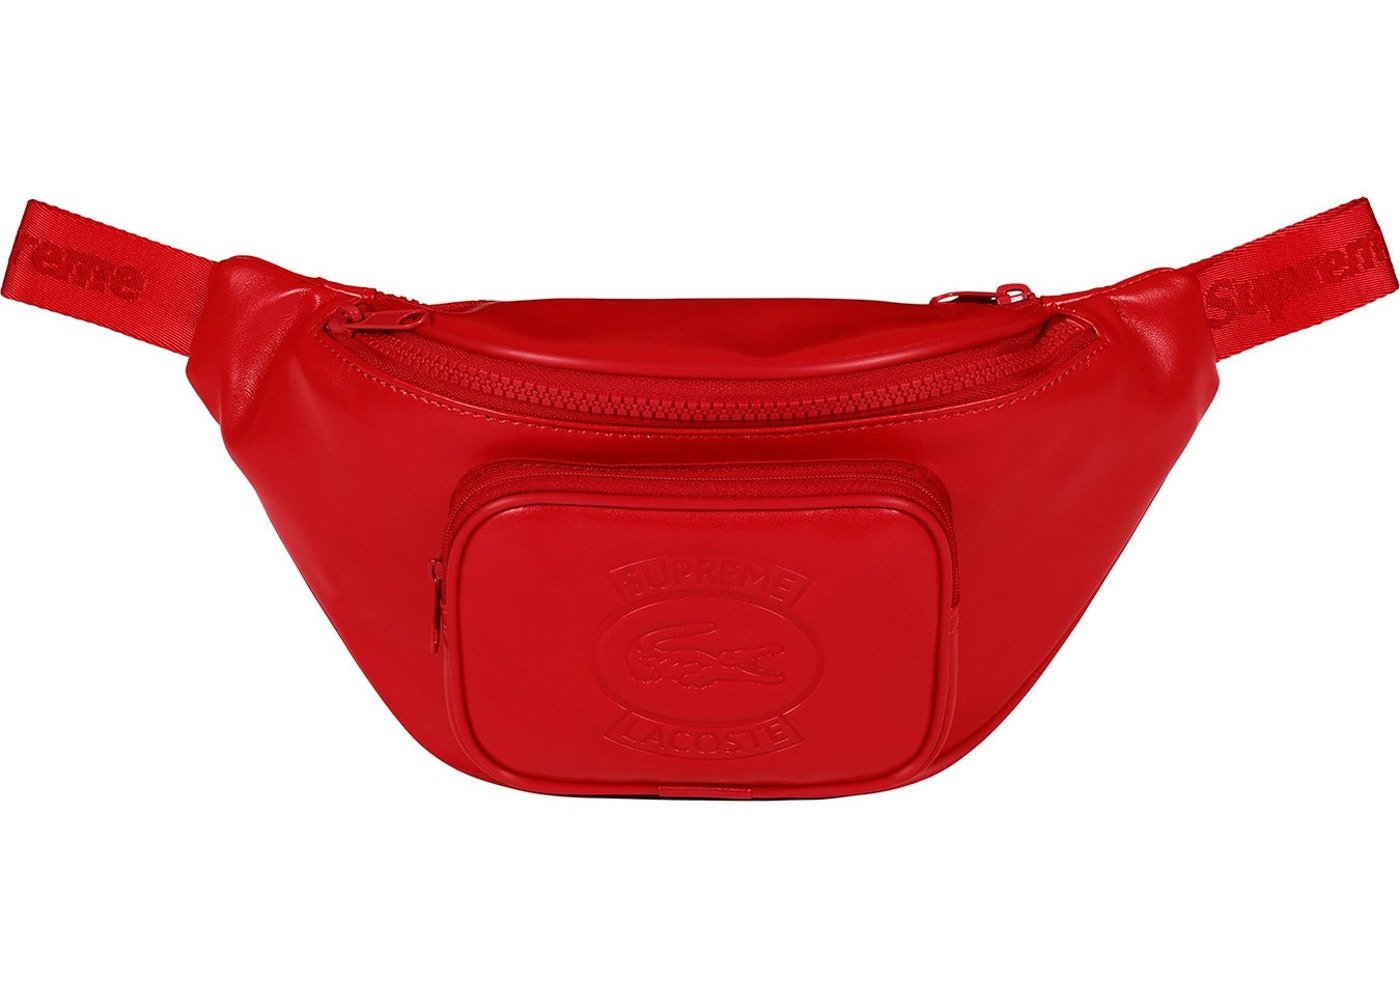 Supreme Logo Waist Bag Red